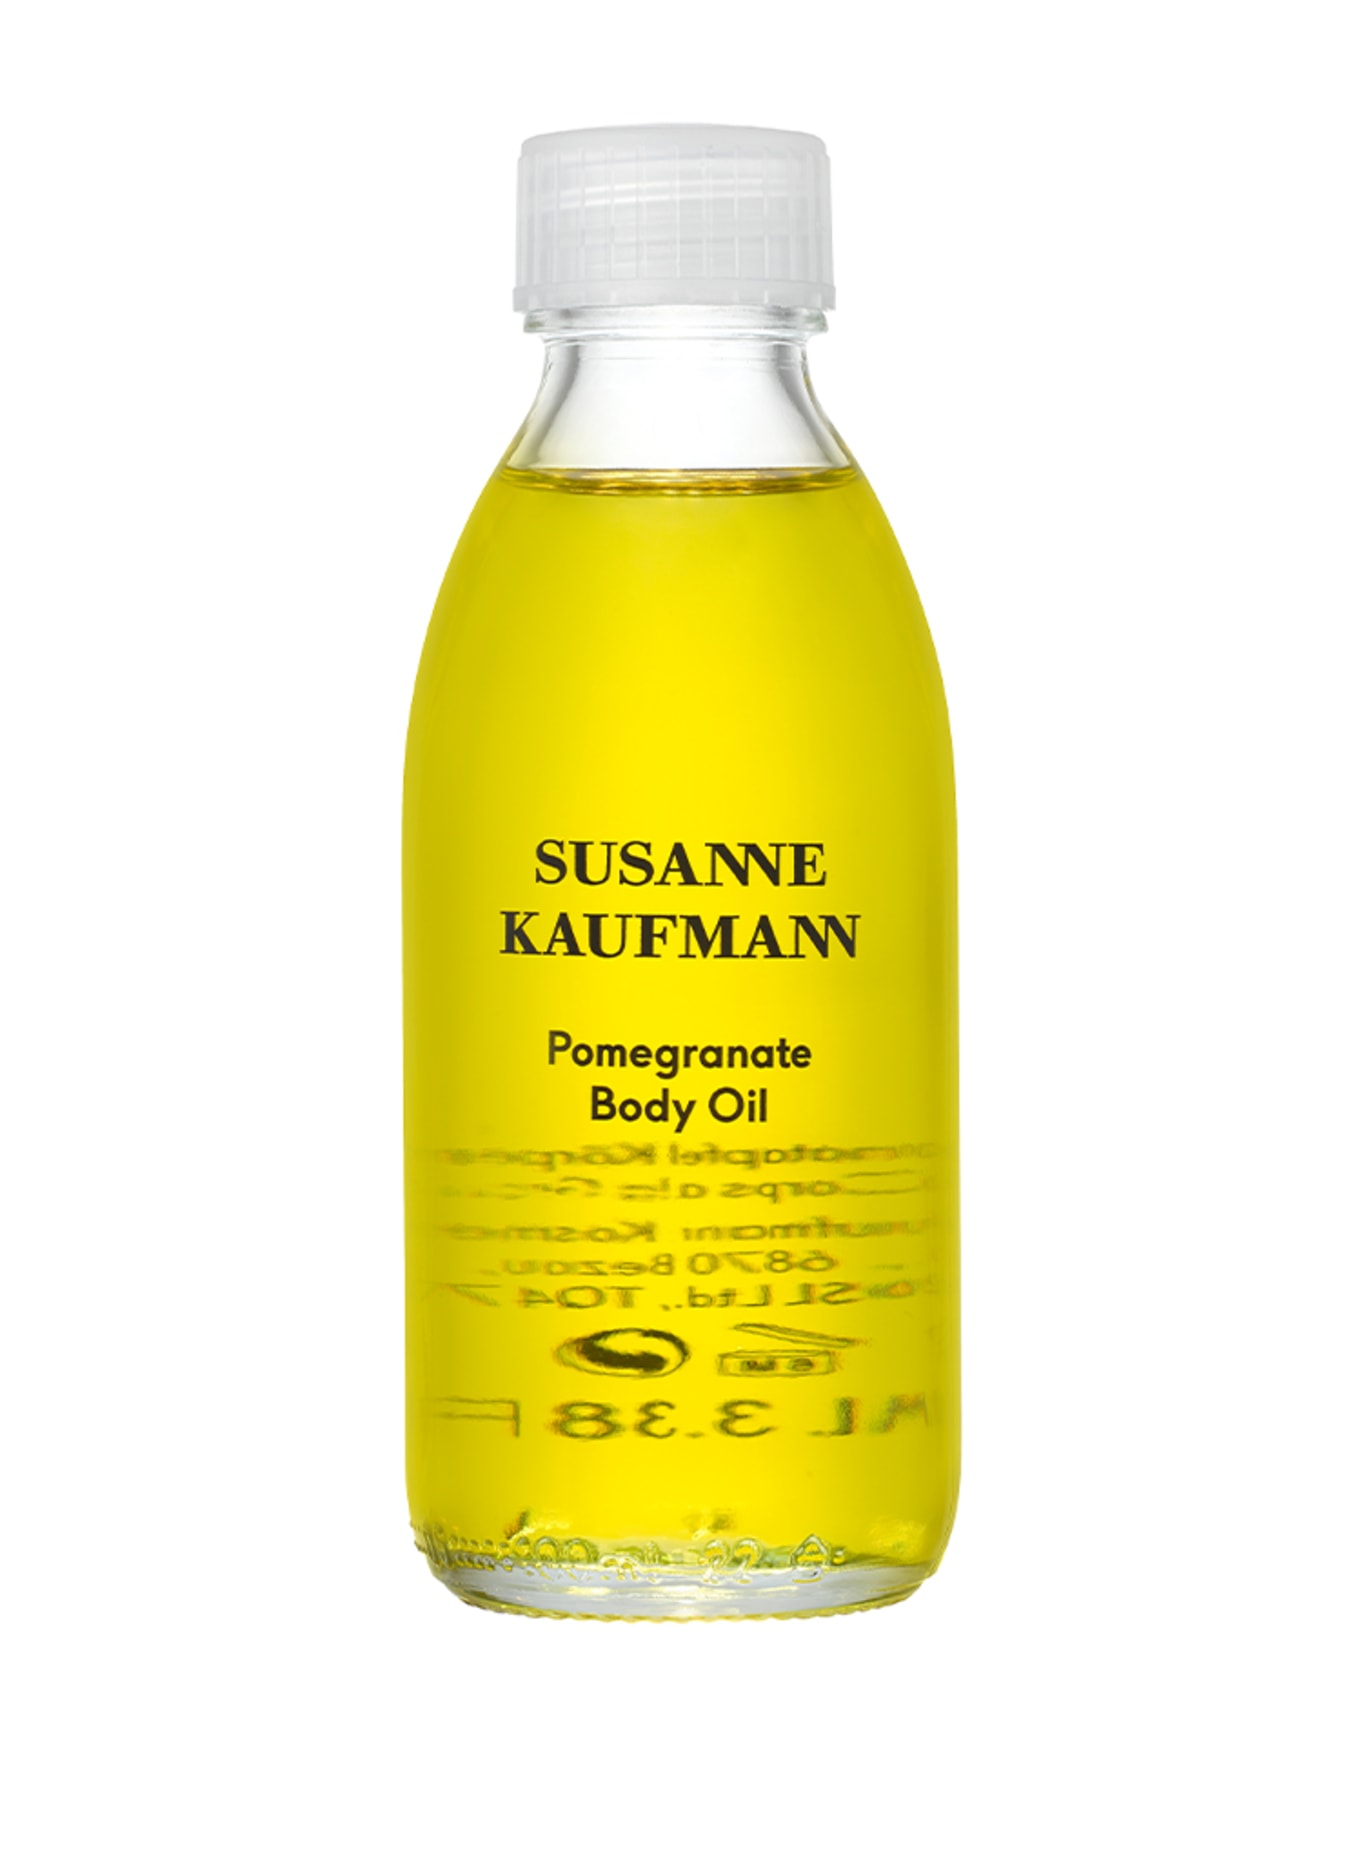 SUSANNE KAUFMANN POMEGRANATE BODY OIL (Obrazek 1)